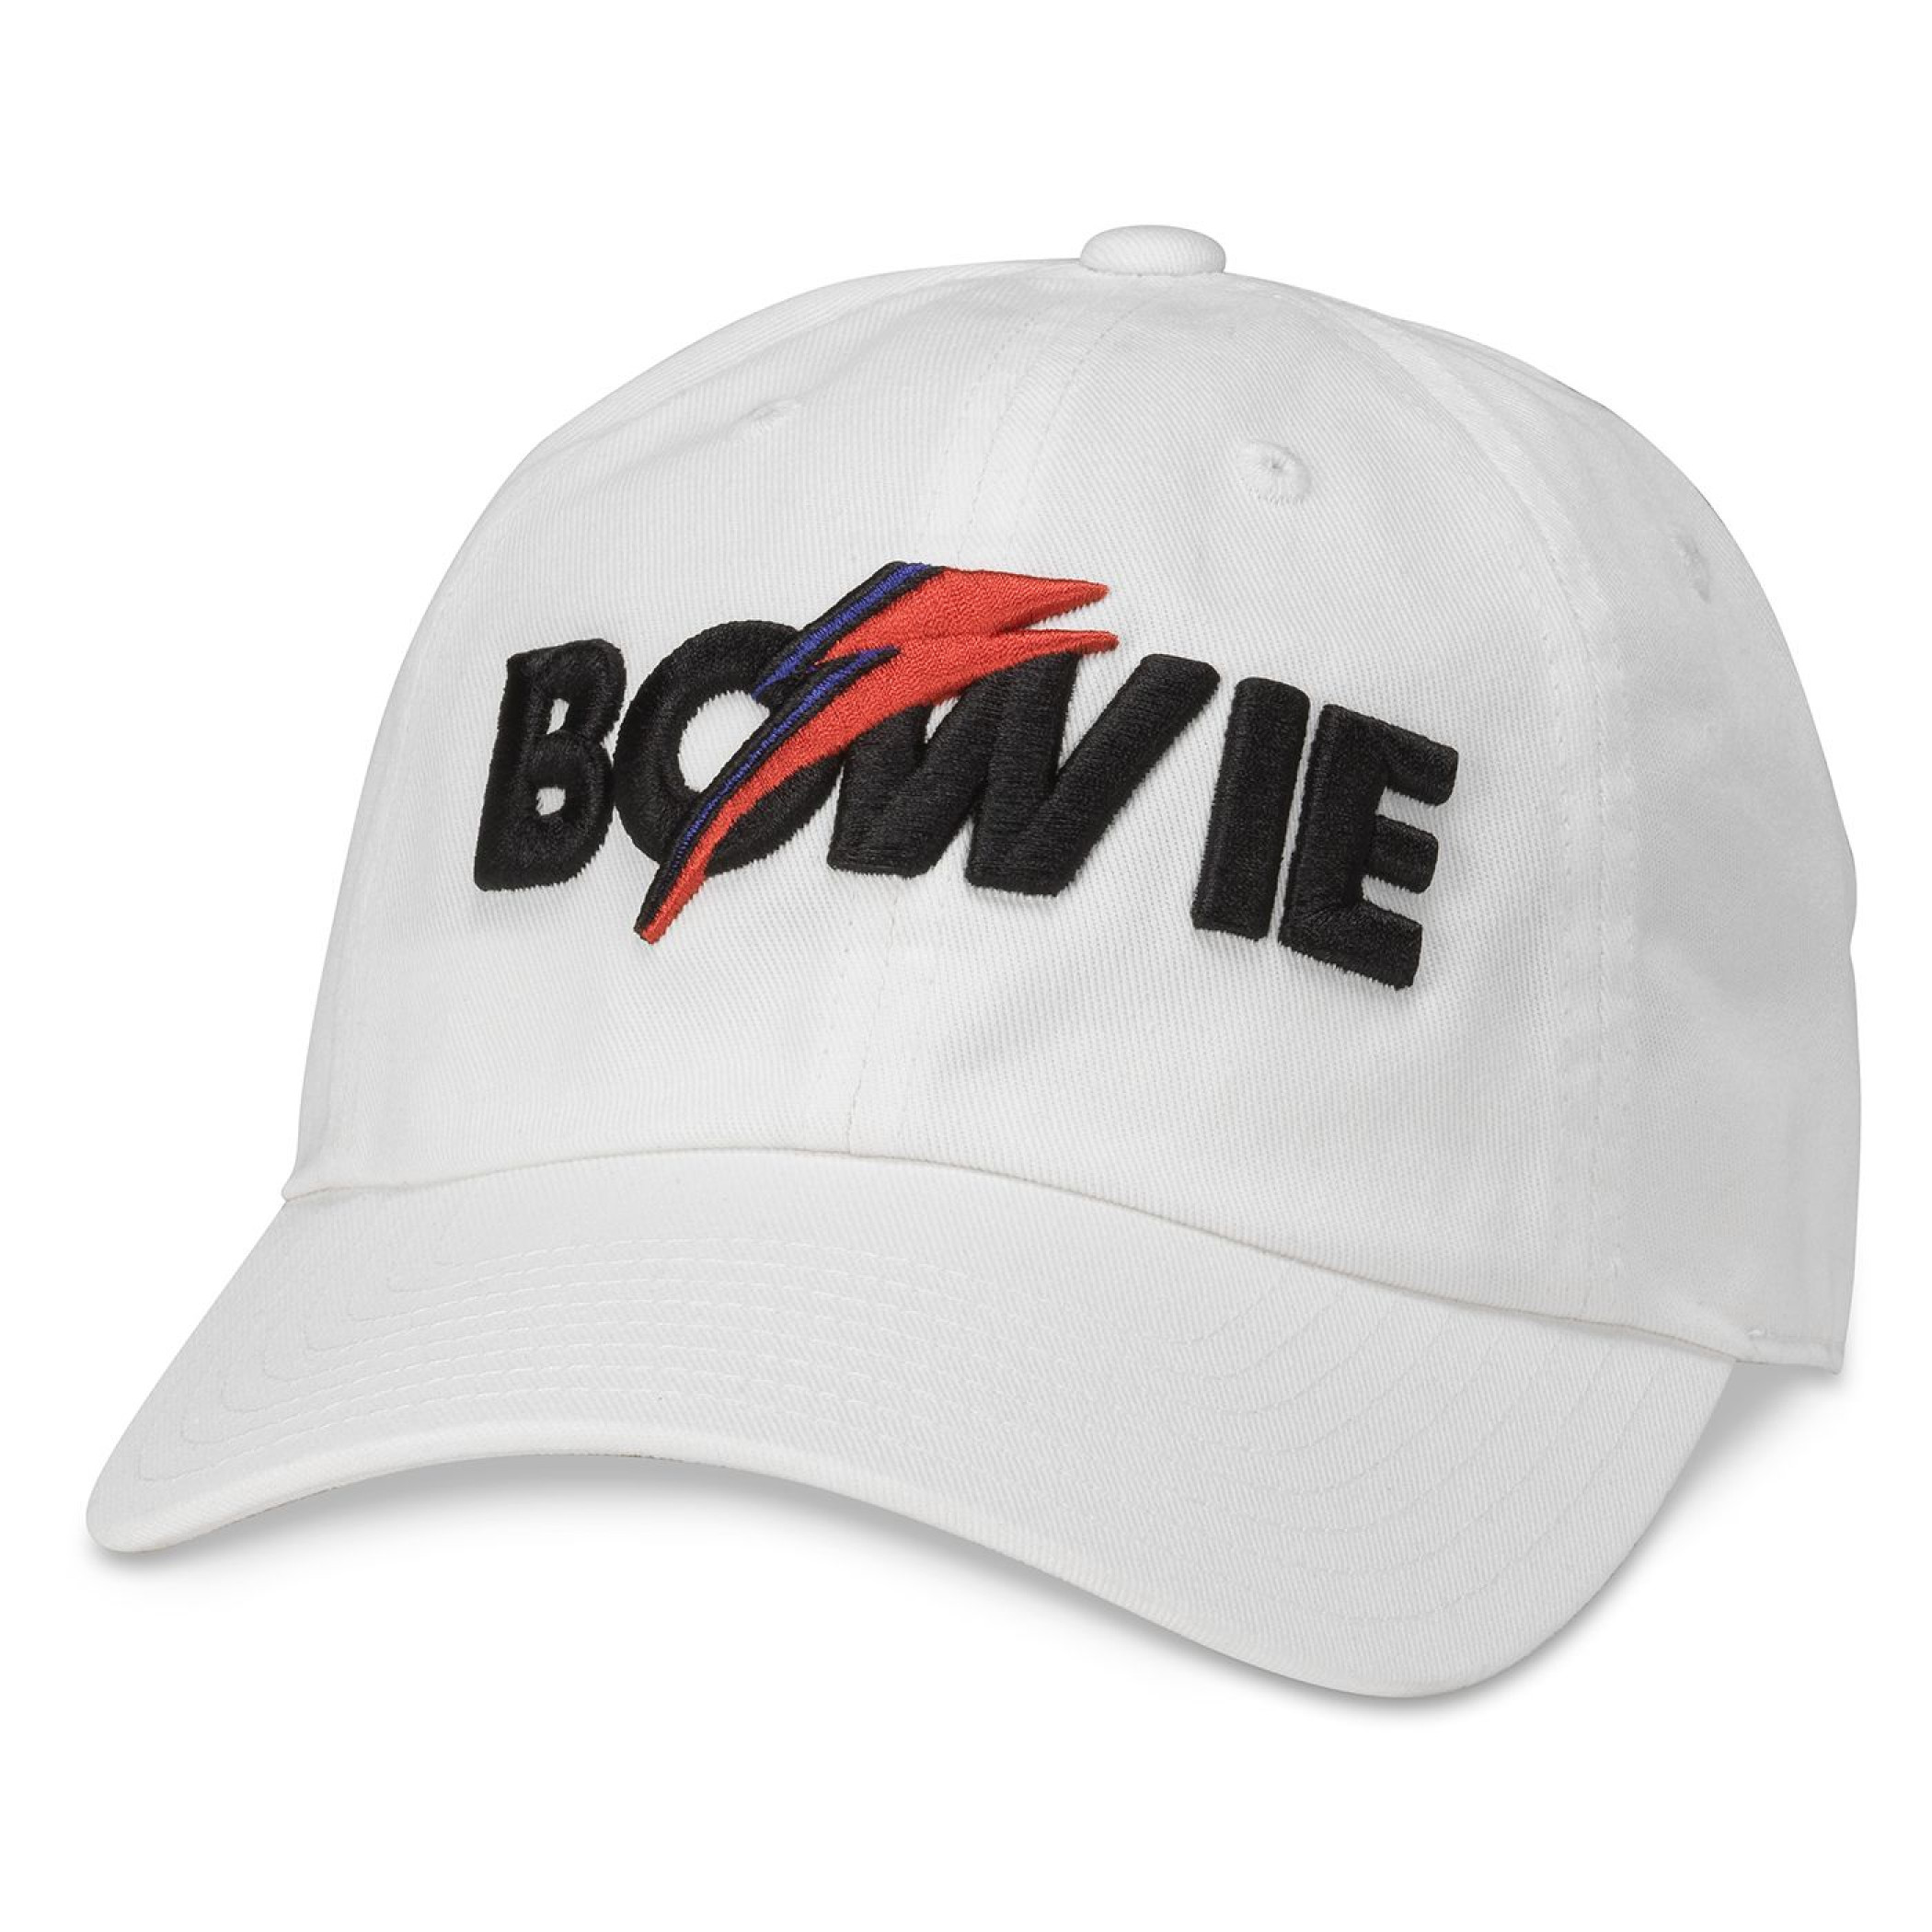 David Bowie Embroidered Logo Adjustable Hat